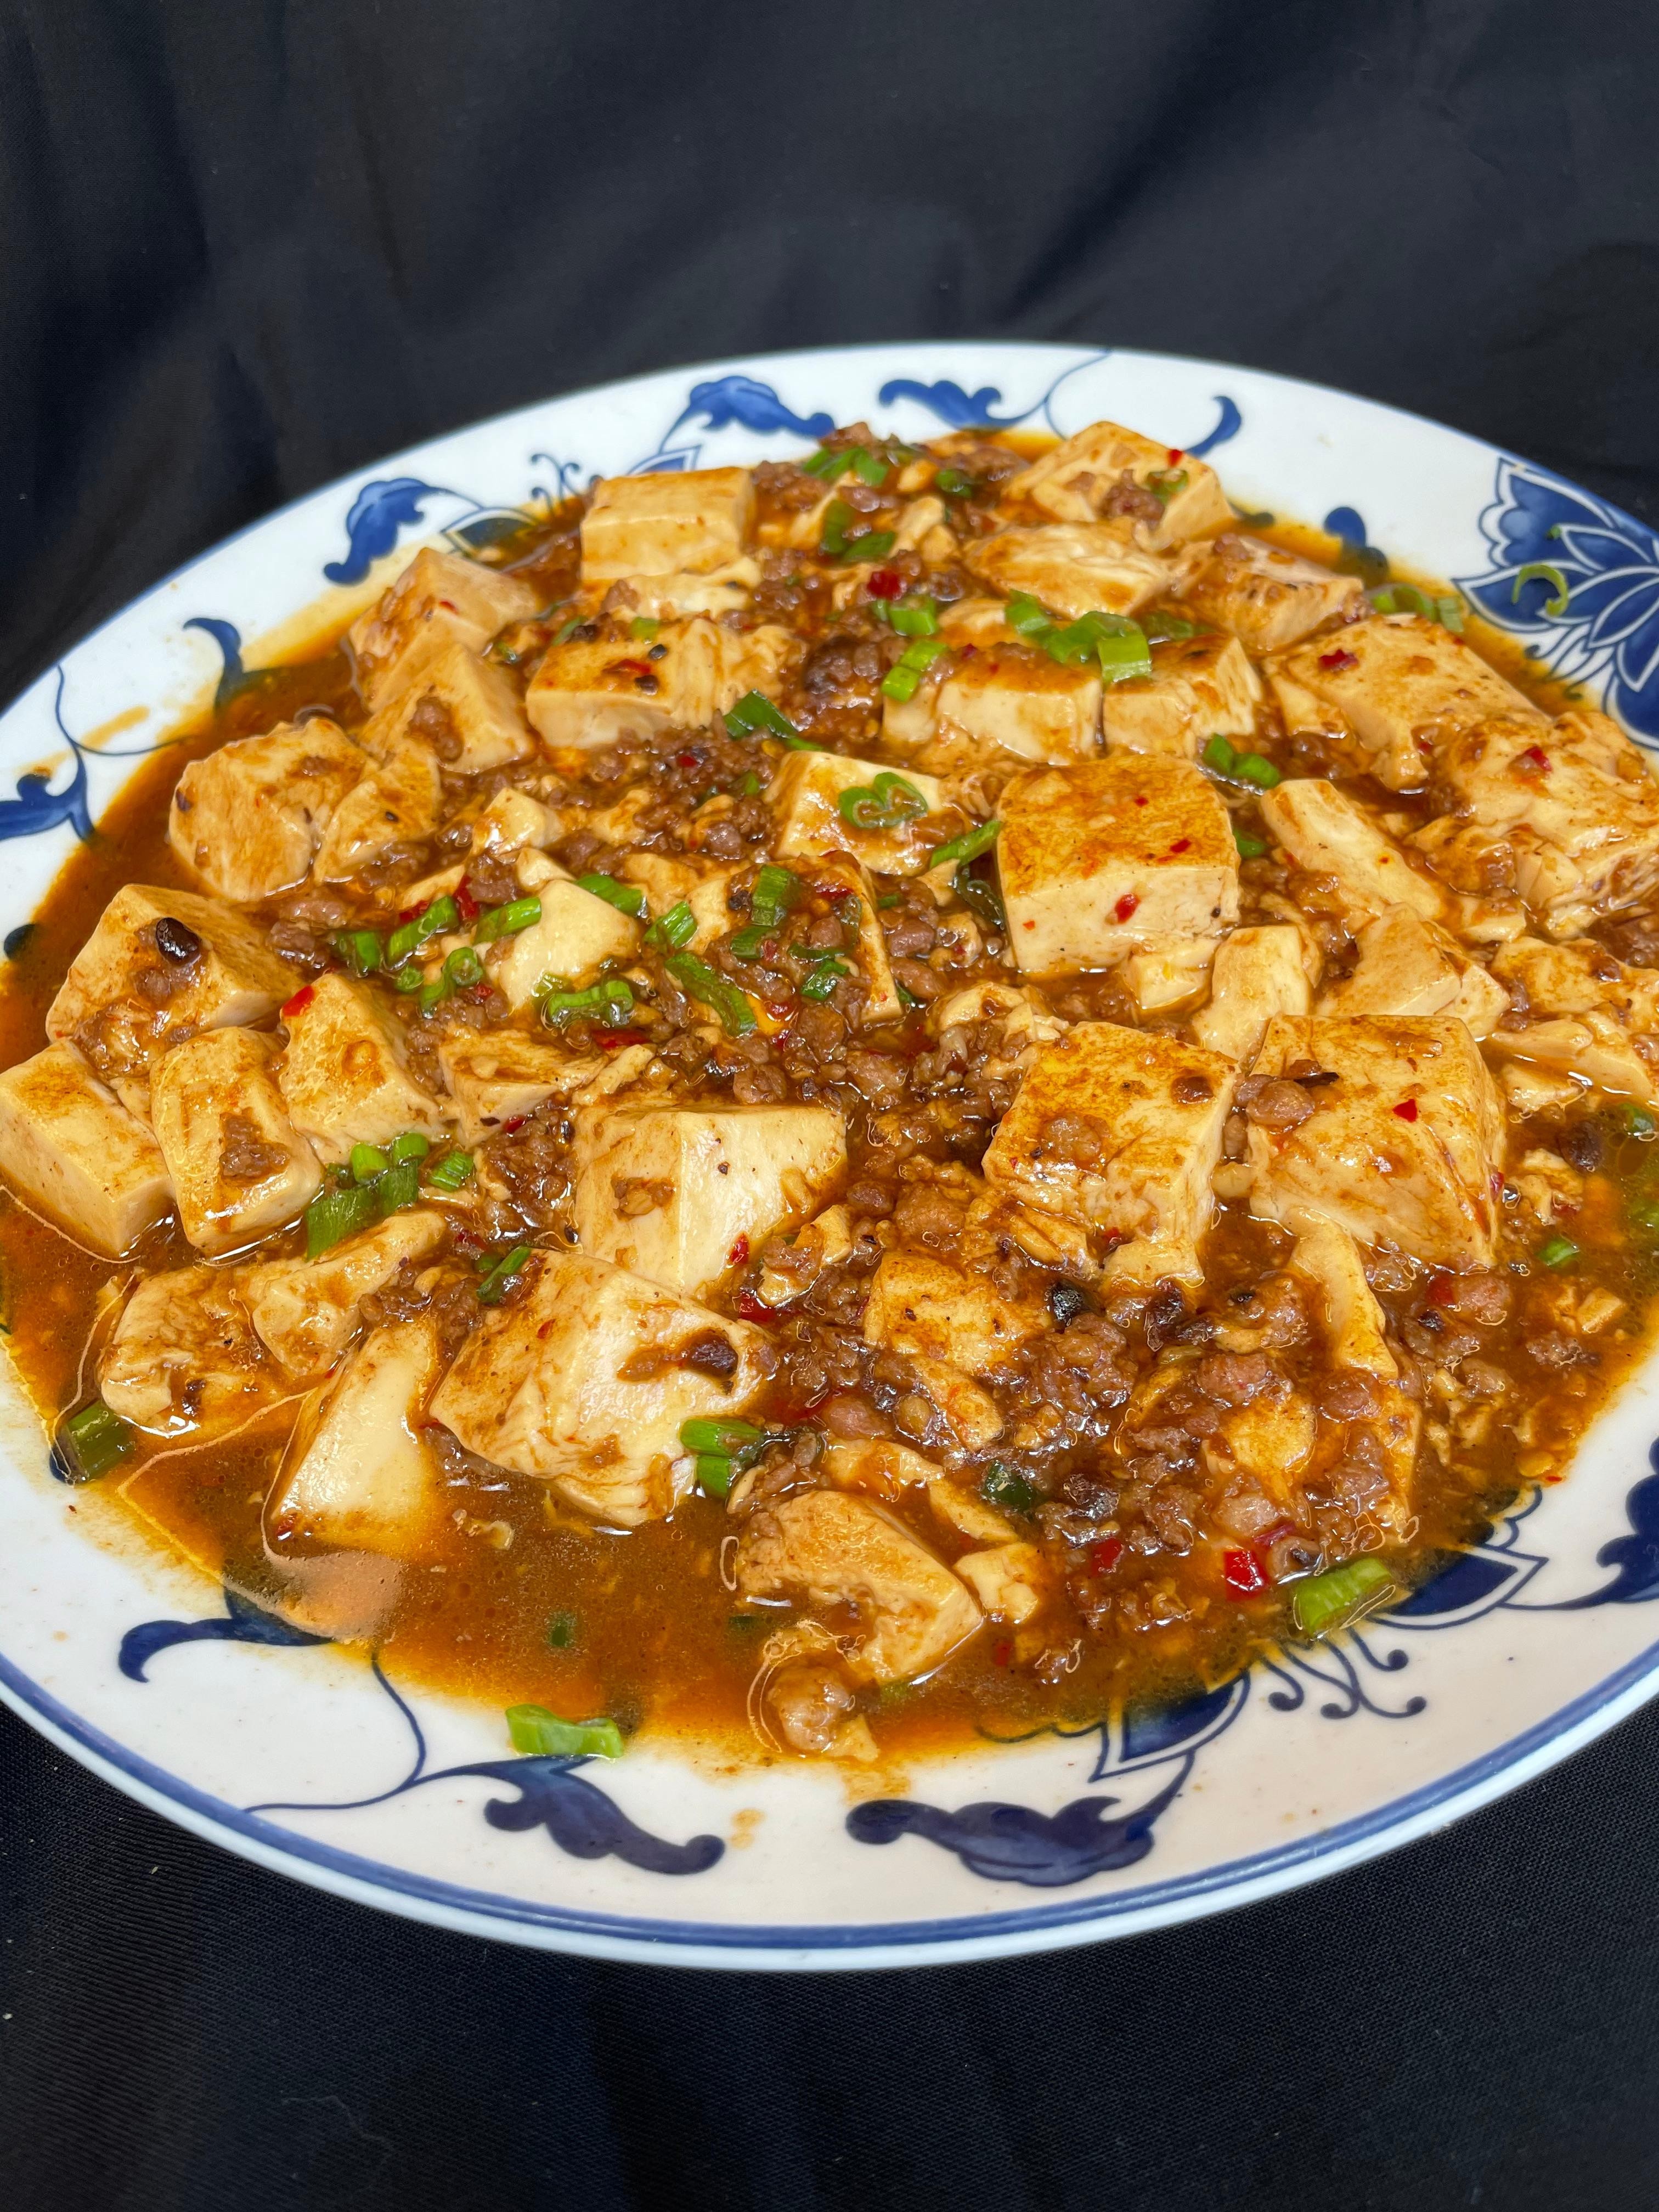 Mapo Tofu with minced pork